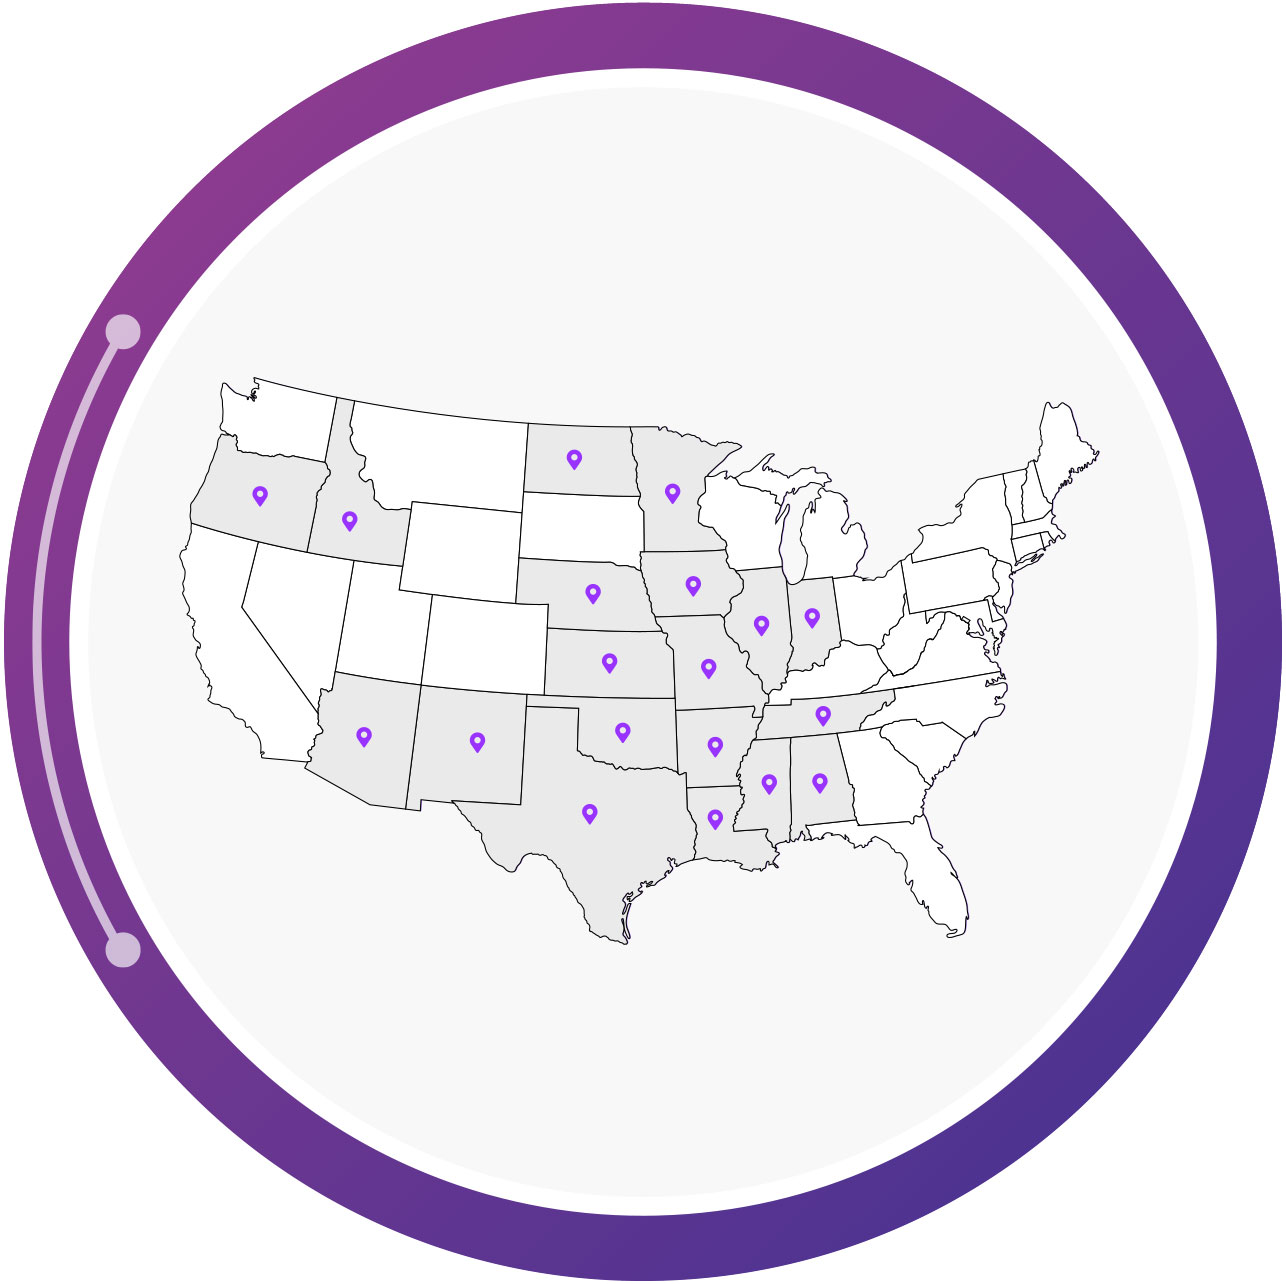 Inside a purple circle there is a map of the US with location pins on the states we service (Alabama, Arizona, Arkansas, Idaho, Illinois, Indiana, Iowa, Kansas, Louisiana, Minnesota, Mississippi, Missouri, Nebraska, New Mexico, North Dakota, Oklahoma, Oregon, Tennessee, and Texas).